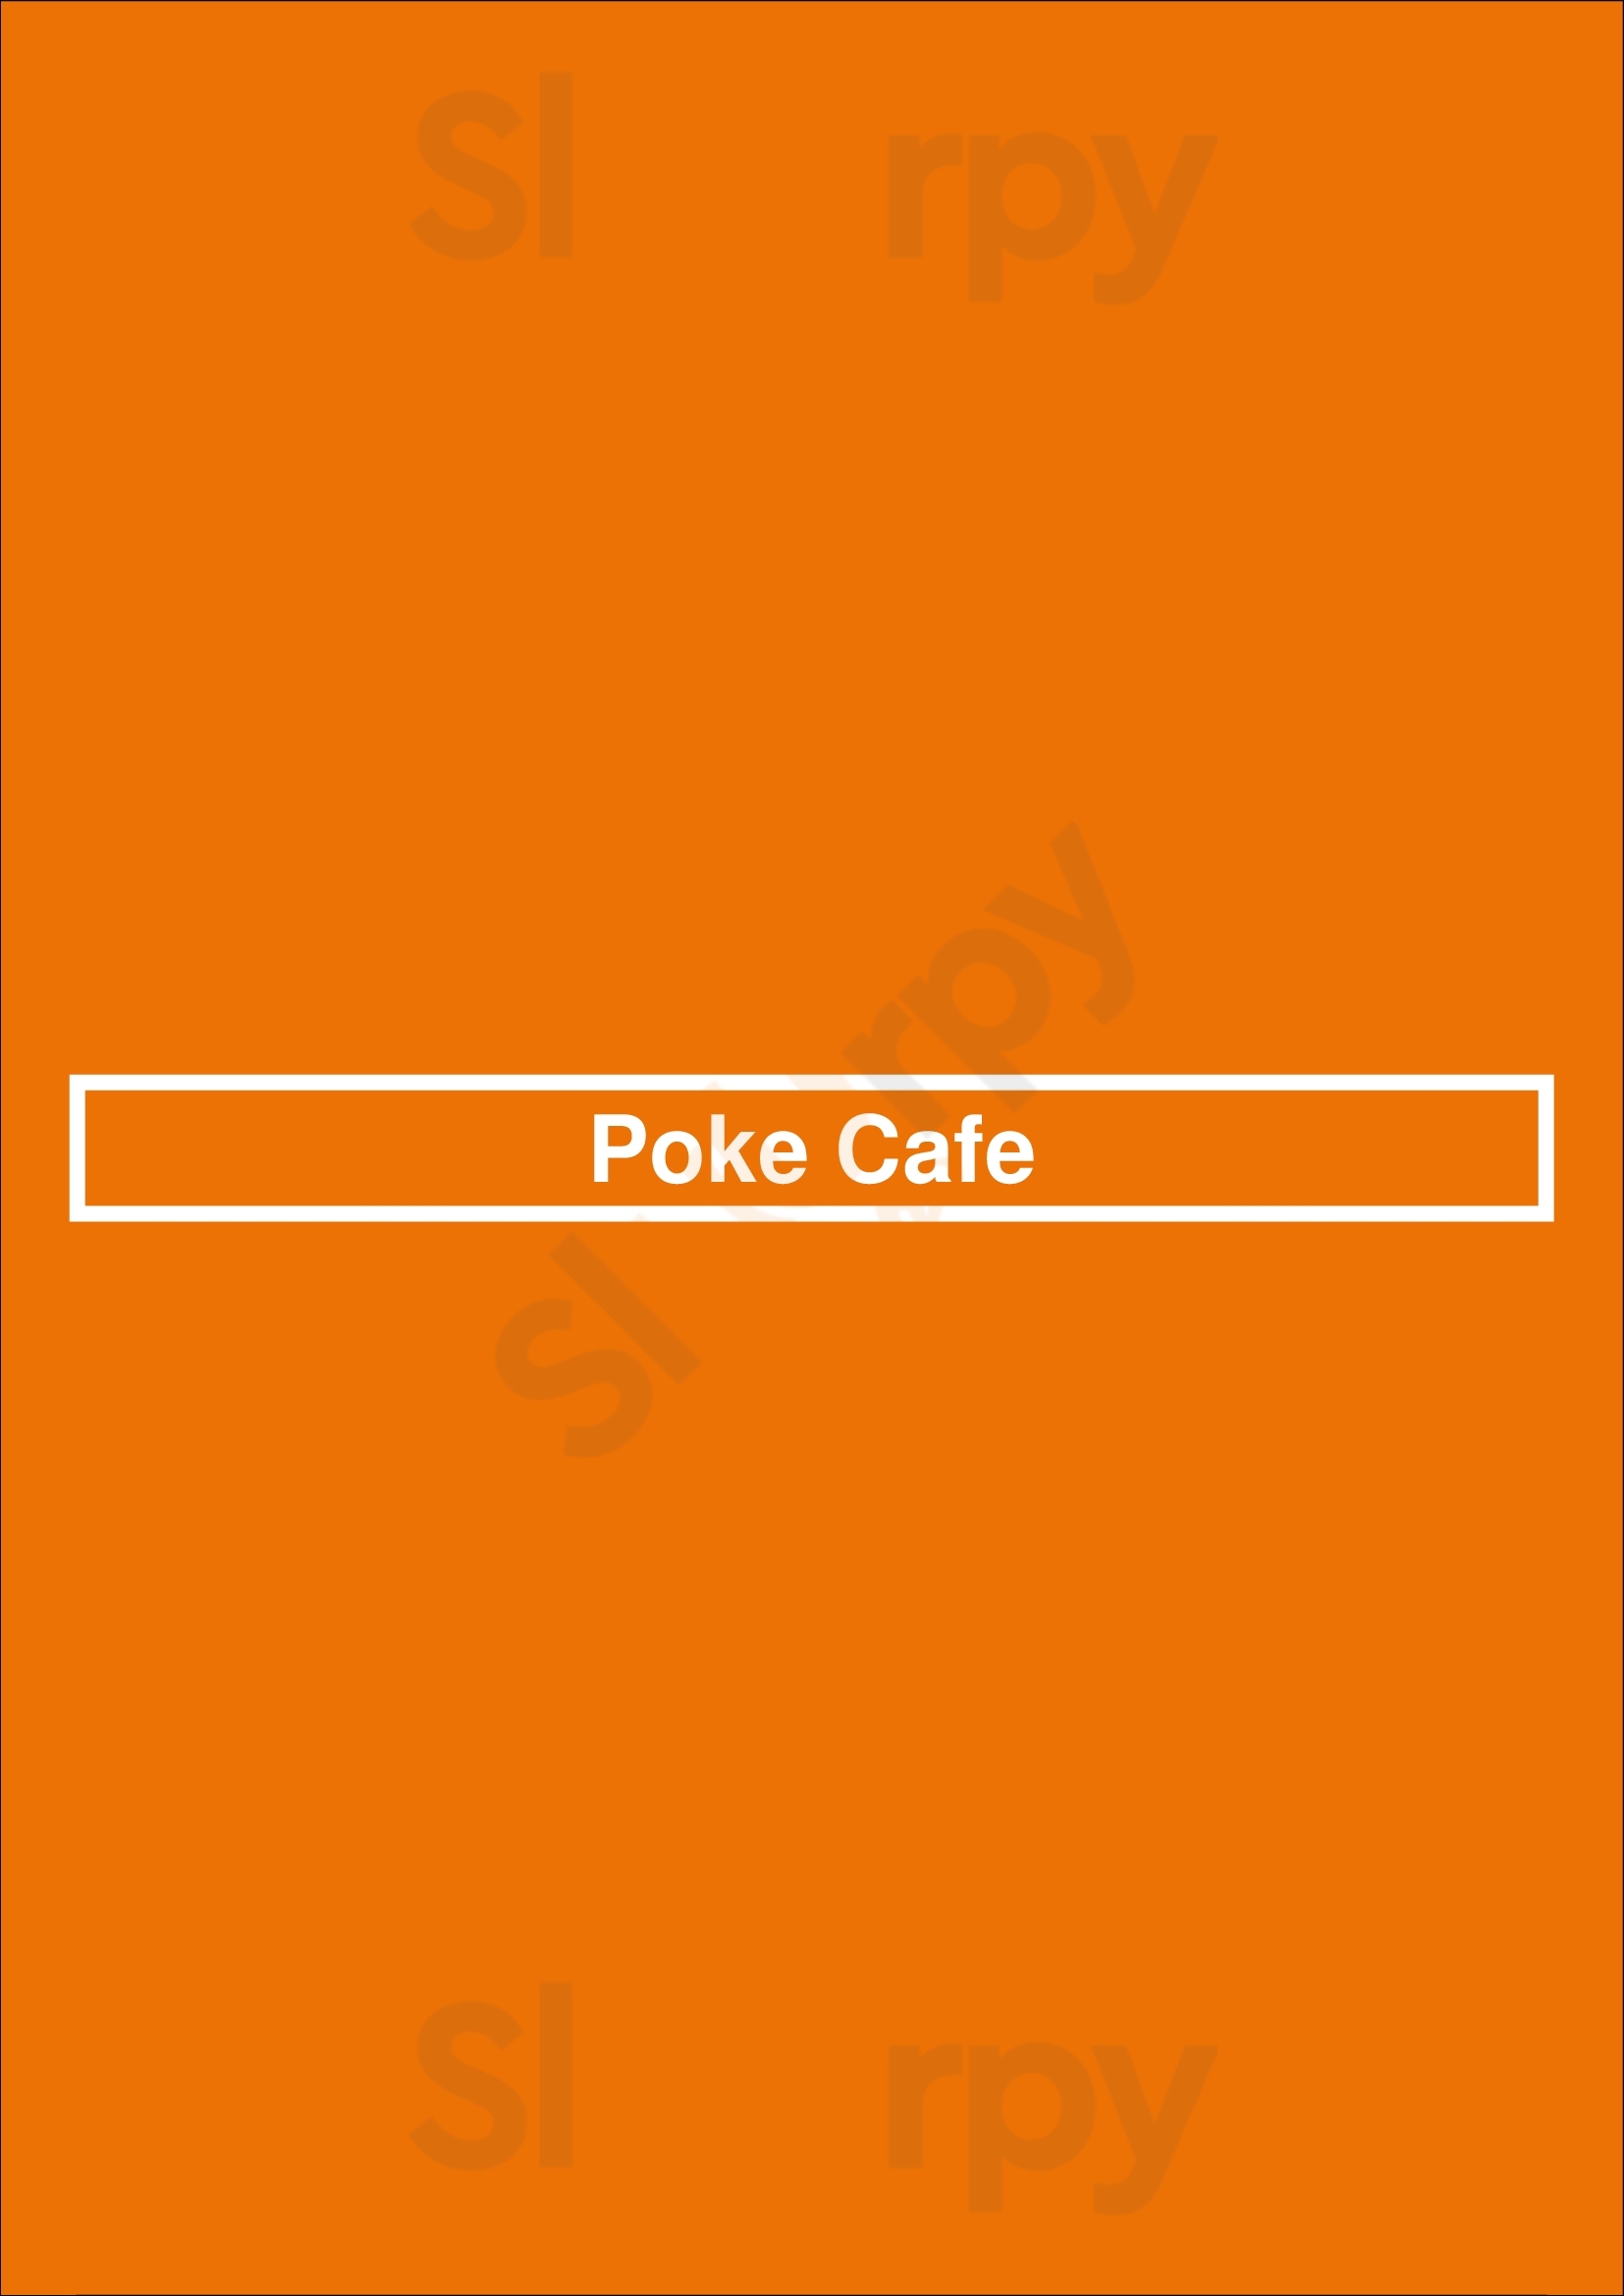 Poke Cafe Charlotte Menu - 1